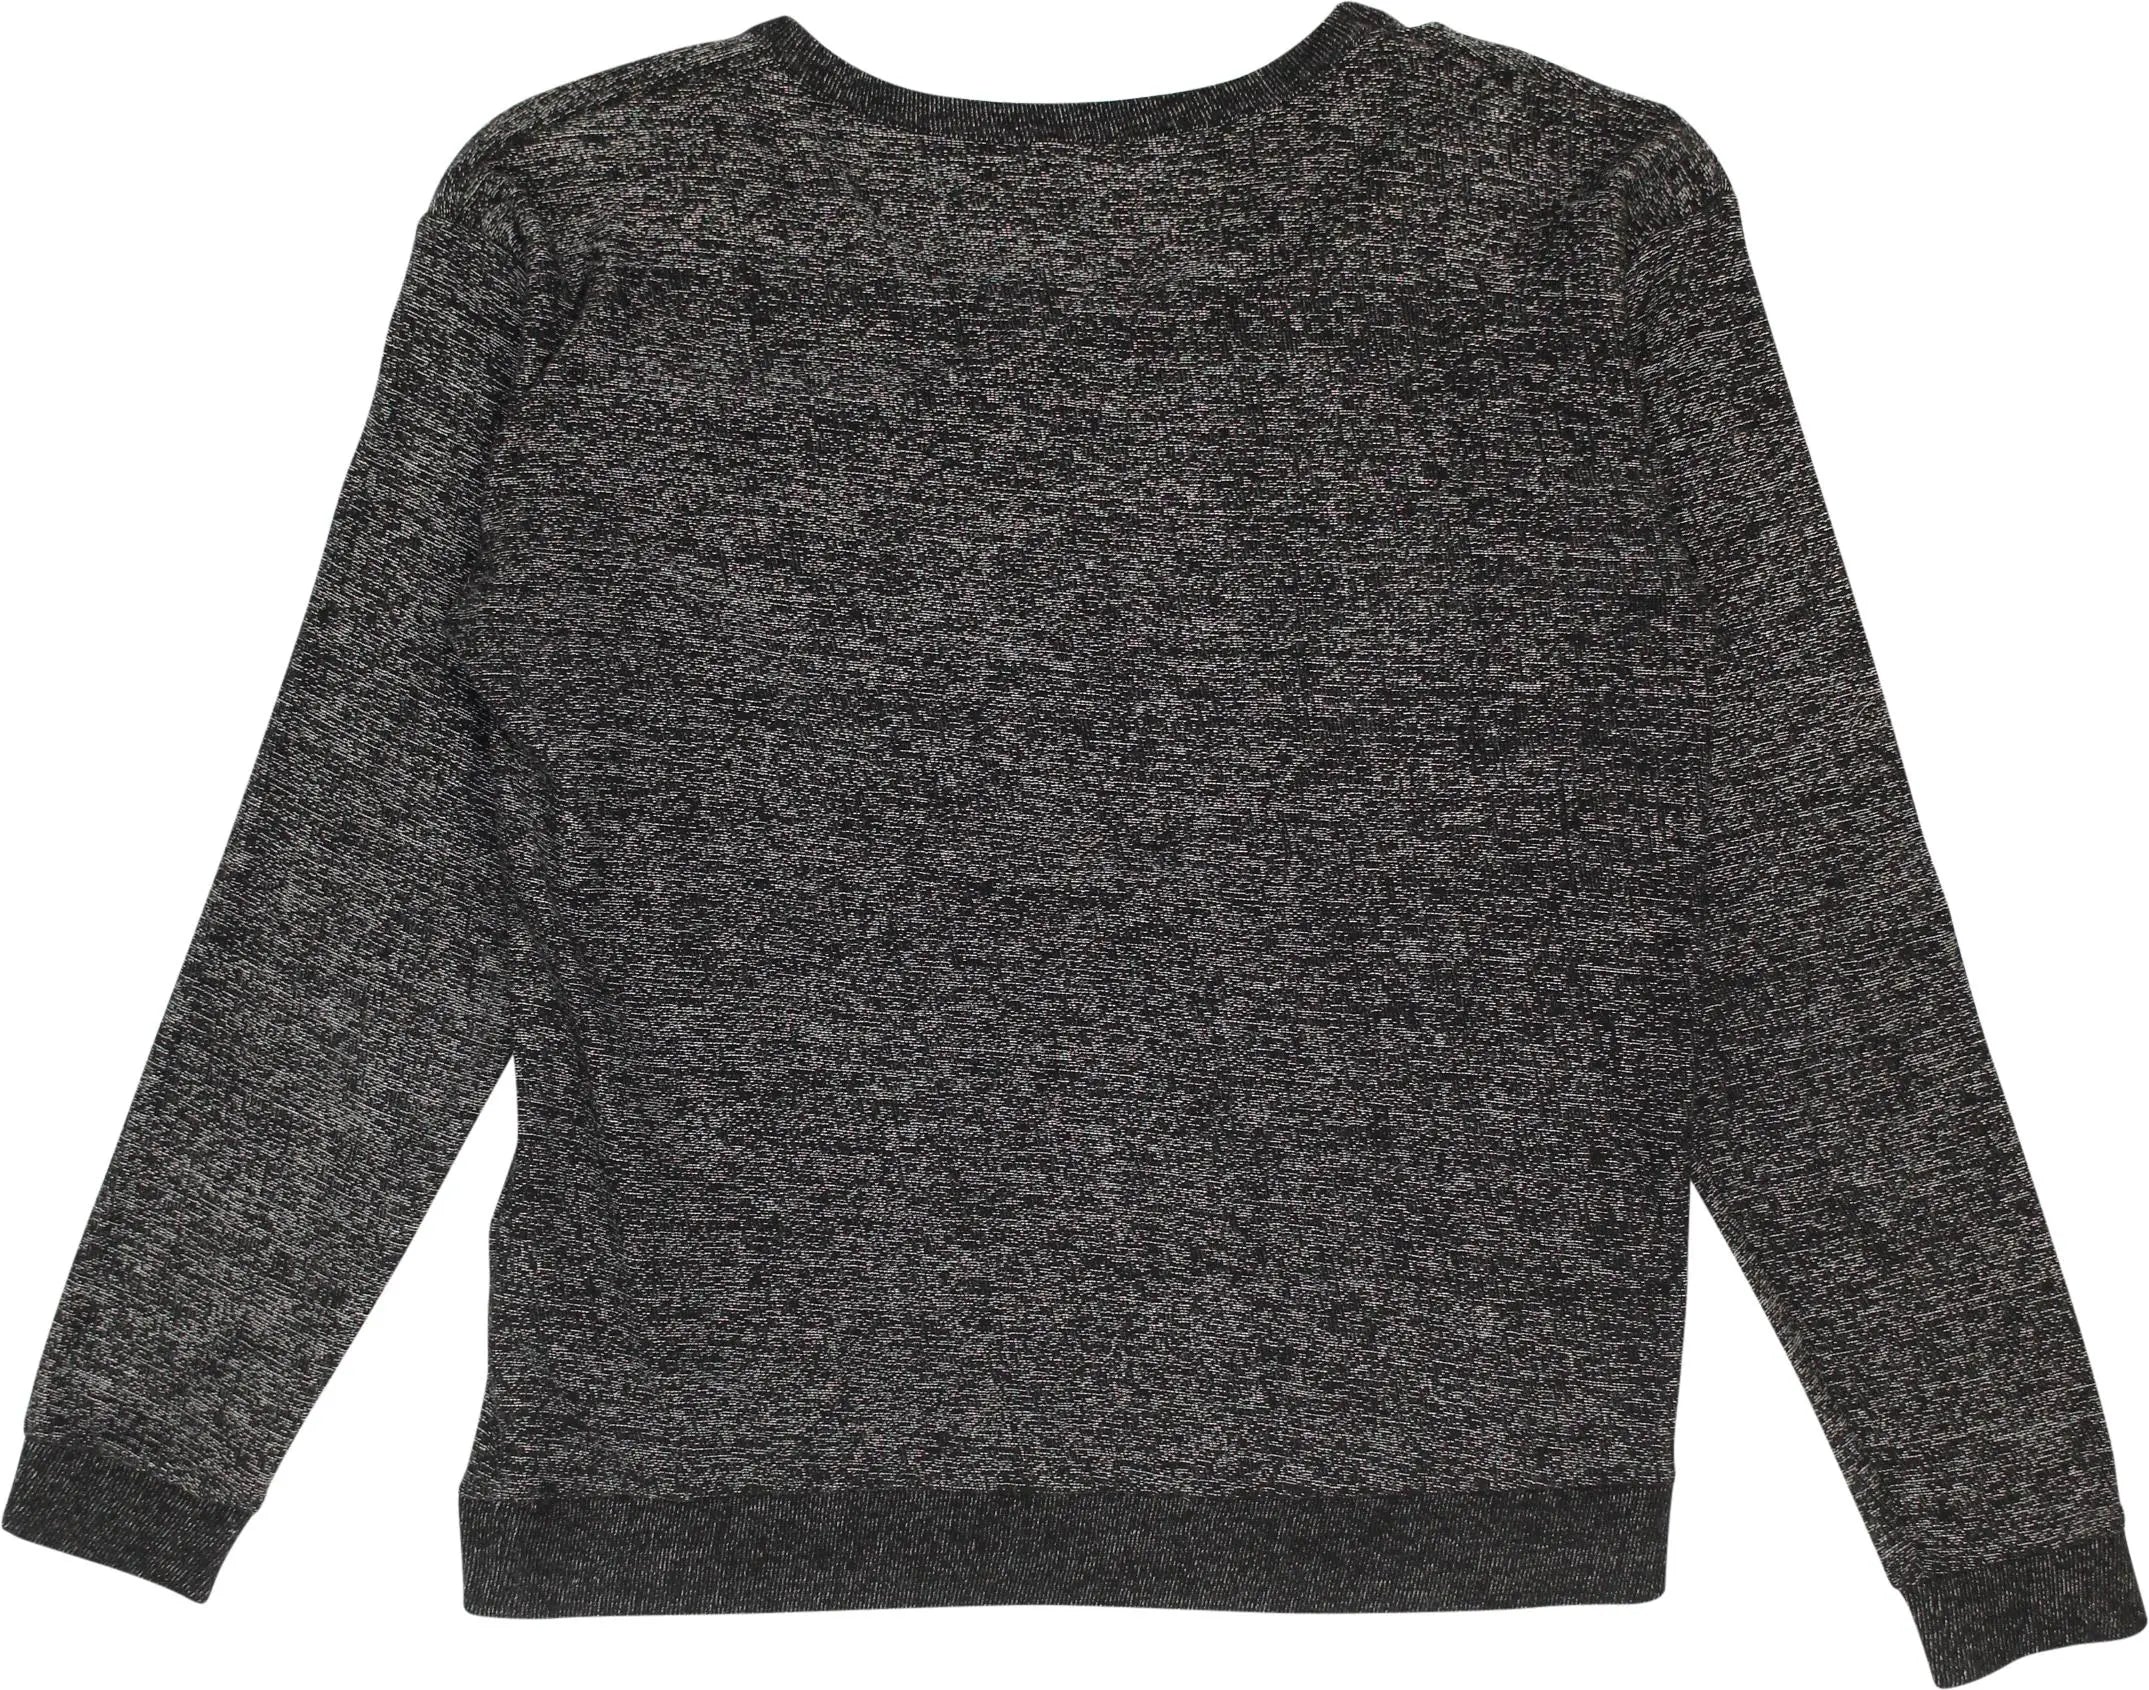 Supertrash - Grey Sweater by Supertrash- ThriftTale.com - Vintage and second handclothing